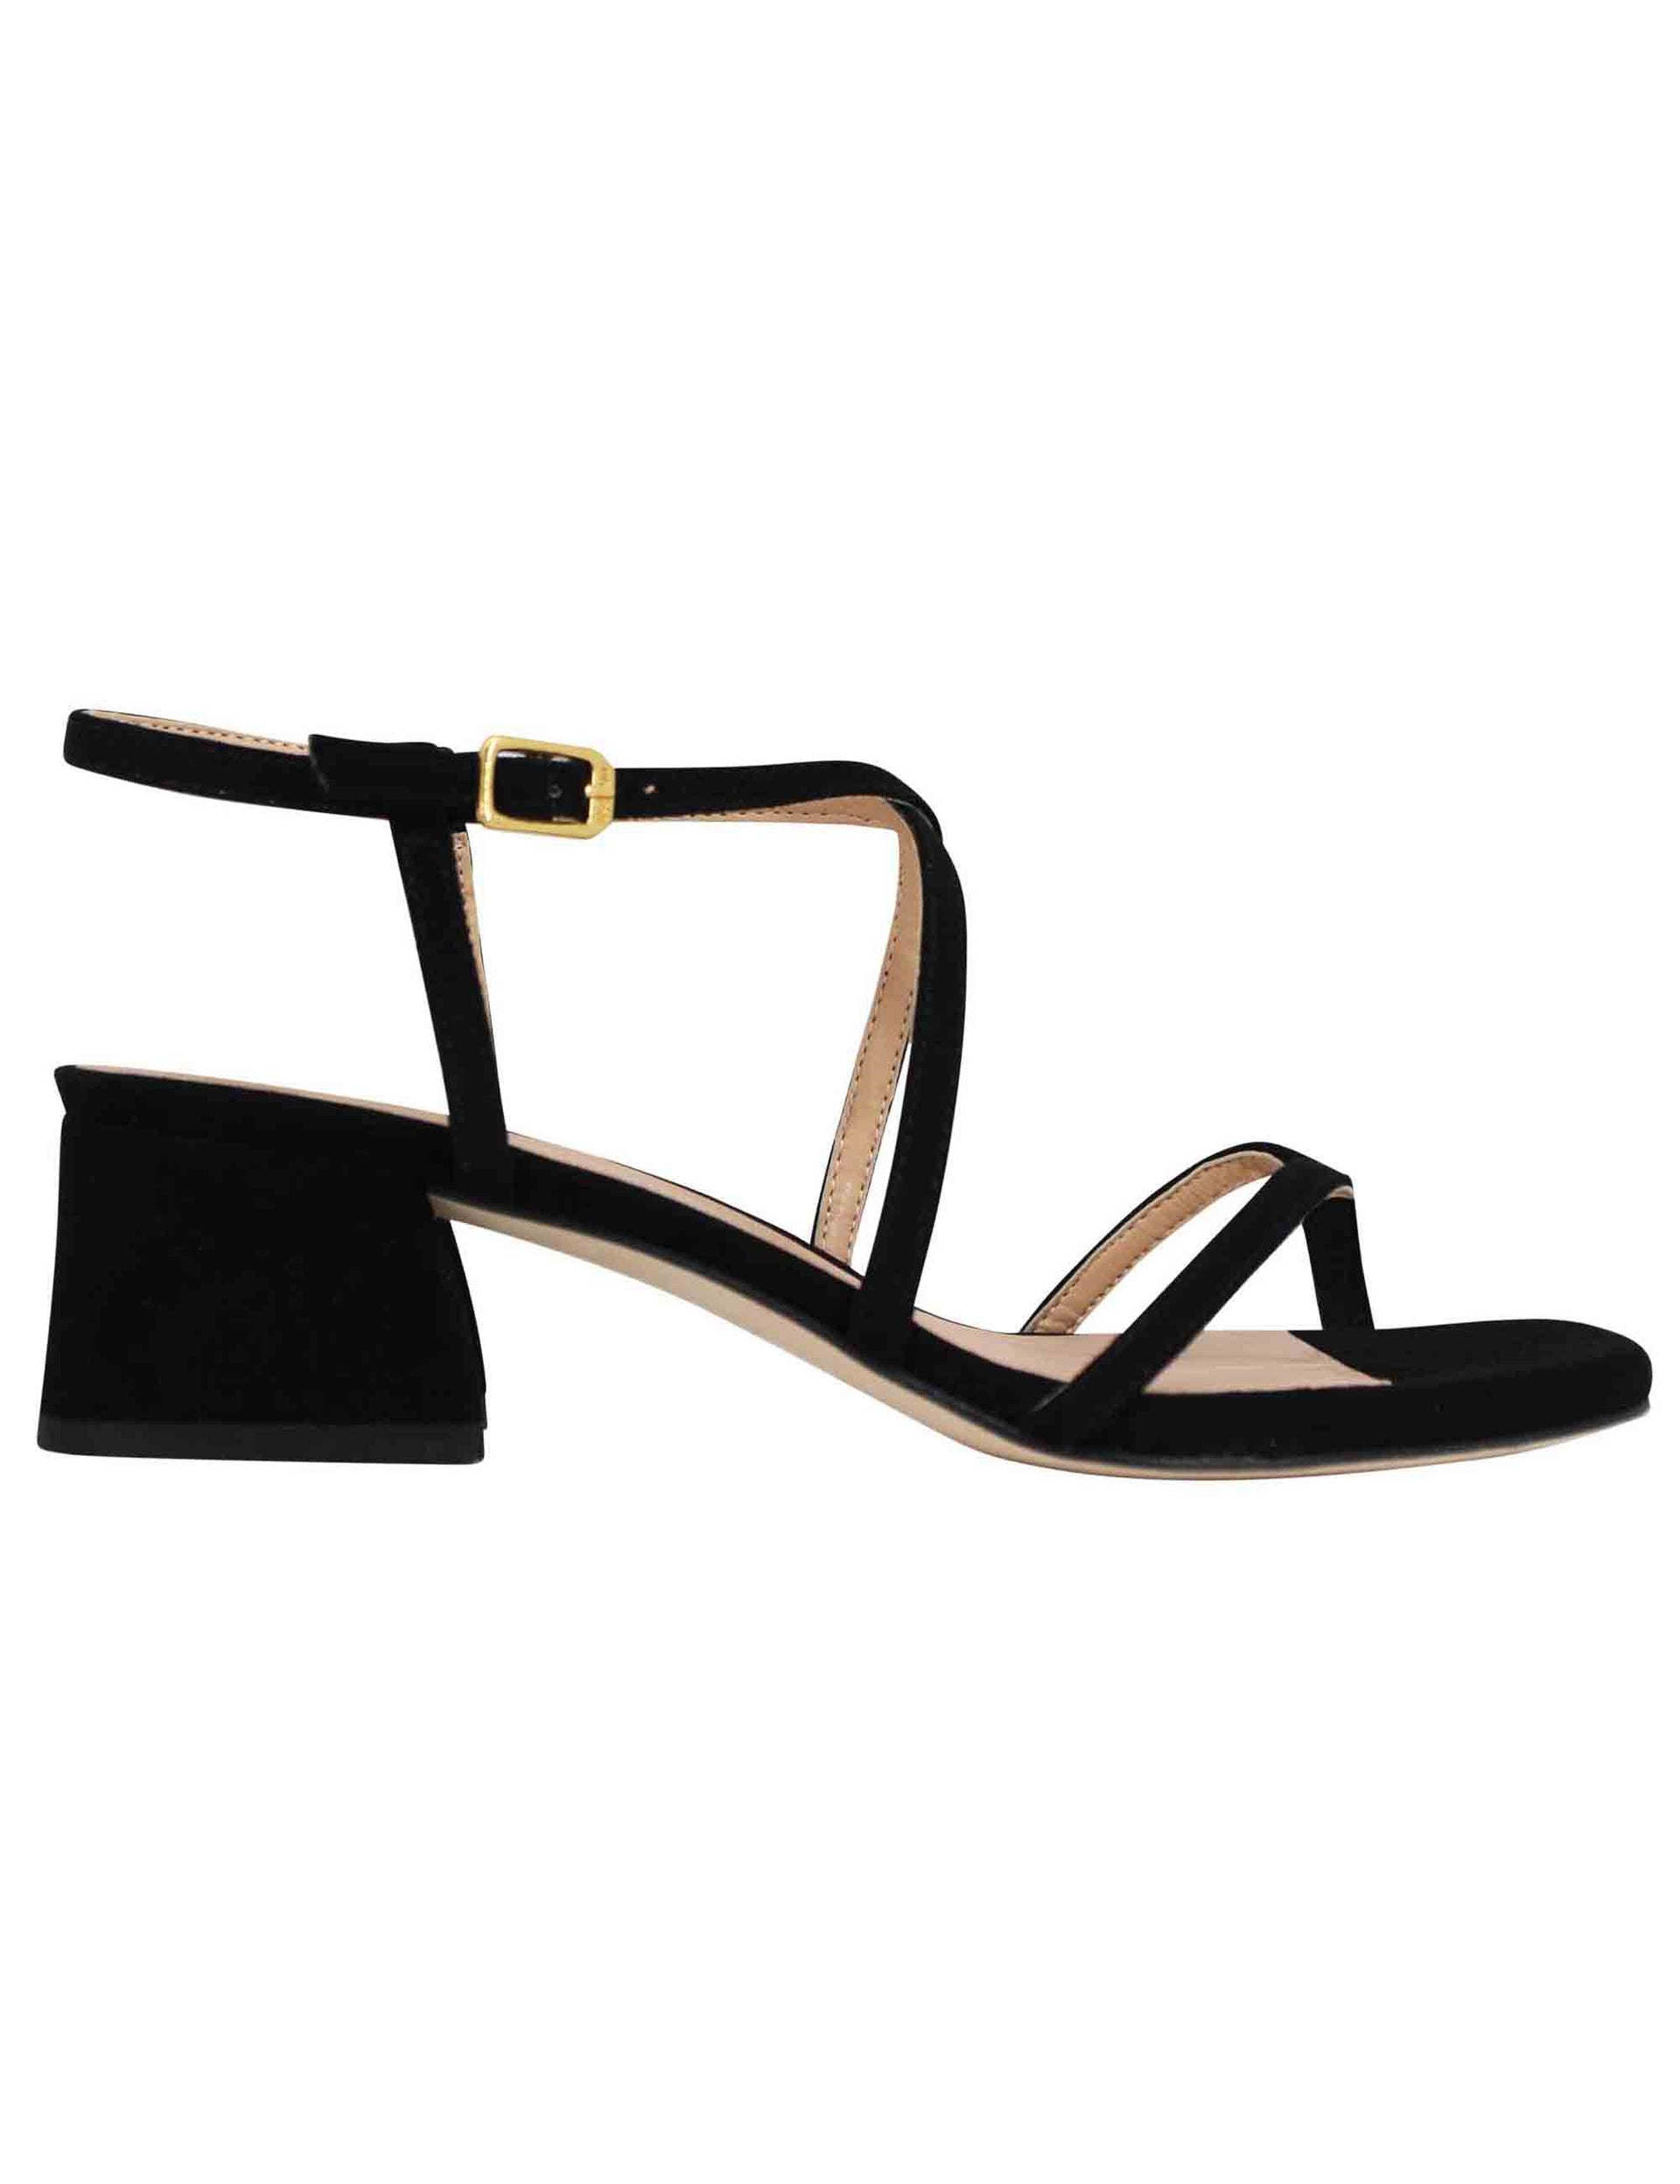 Women's black suede flip-flop sandals with ankle strap